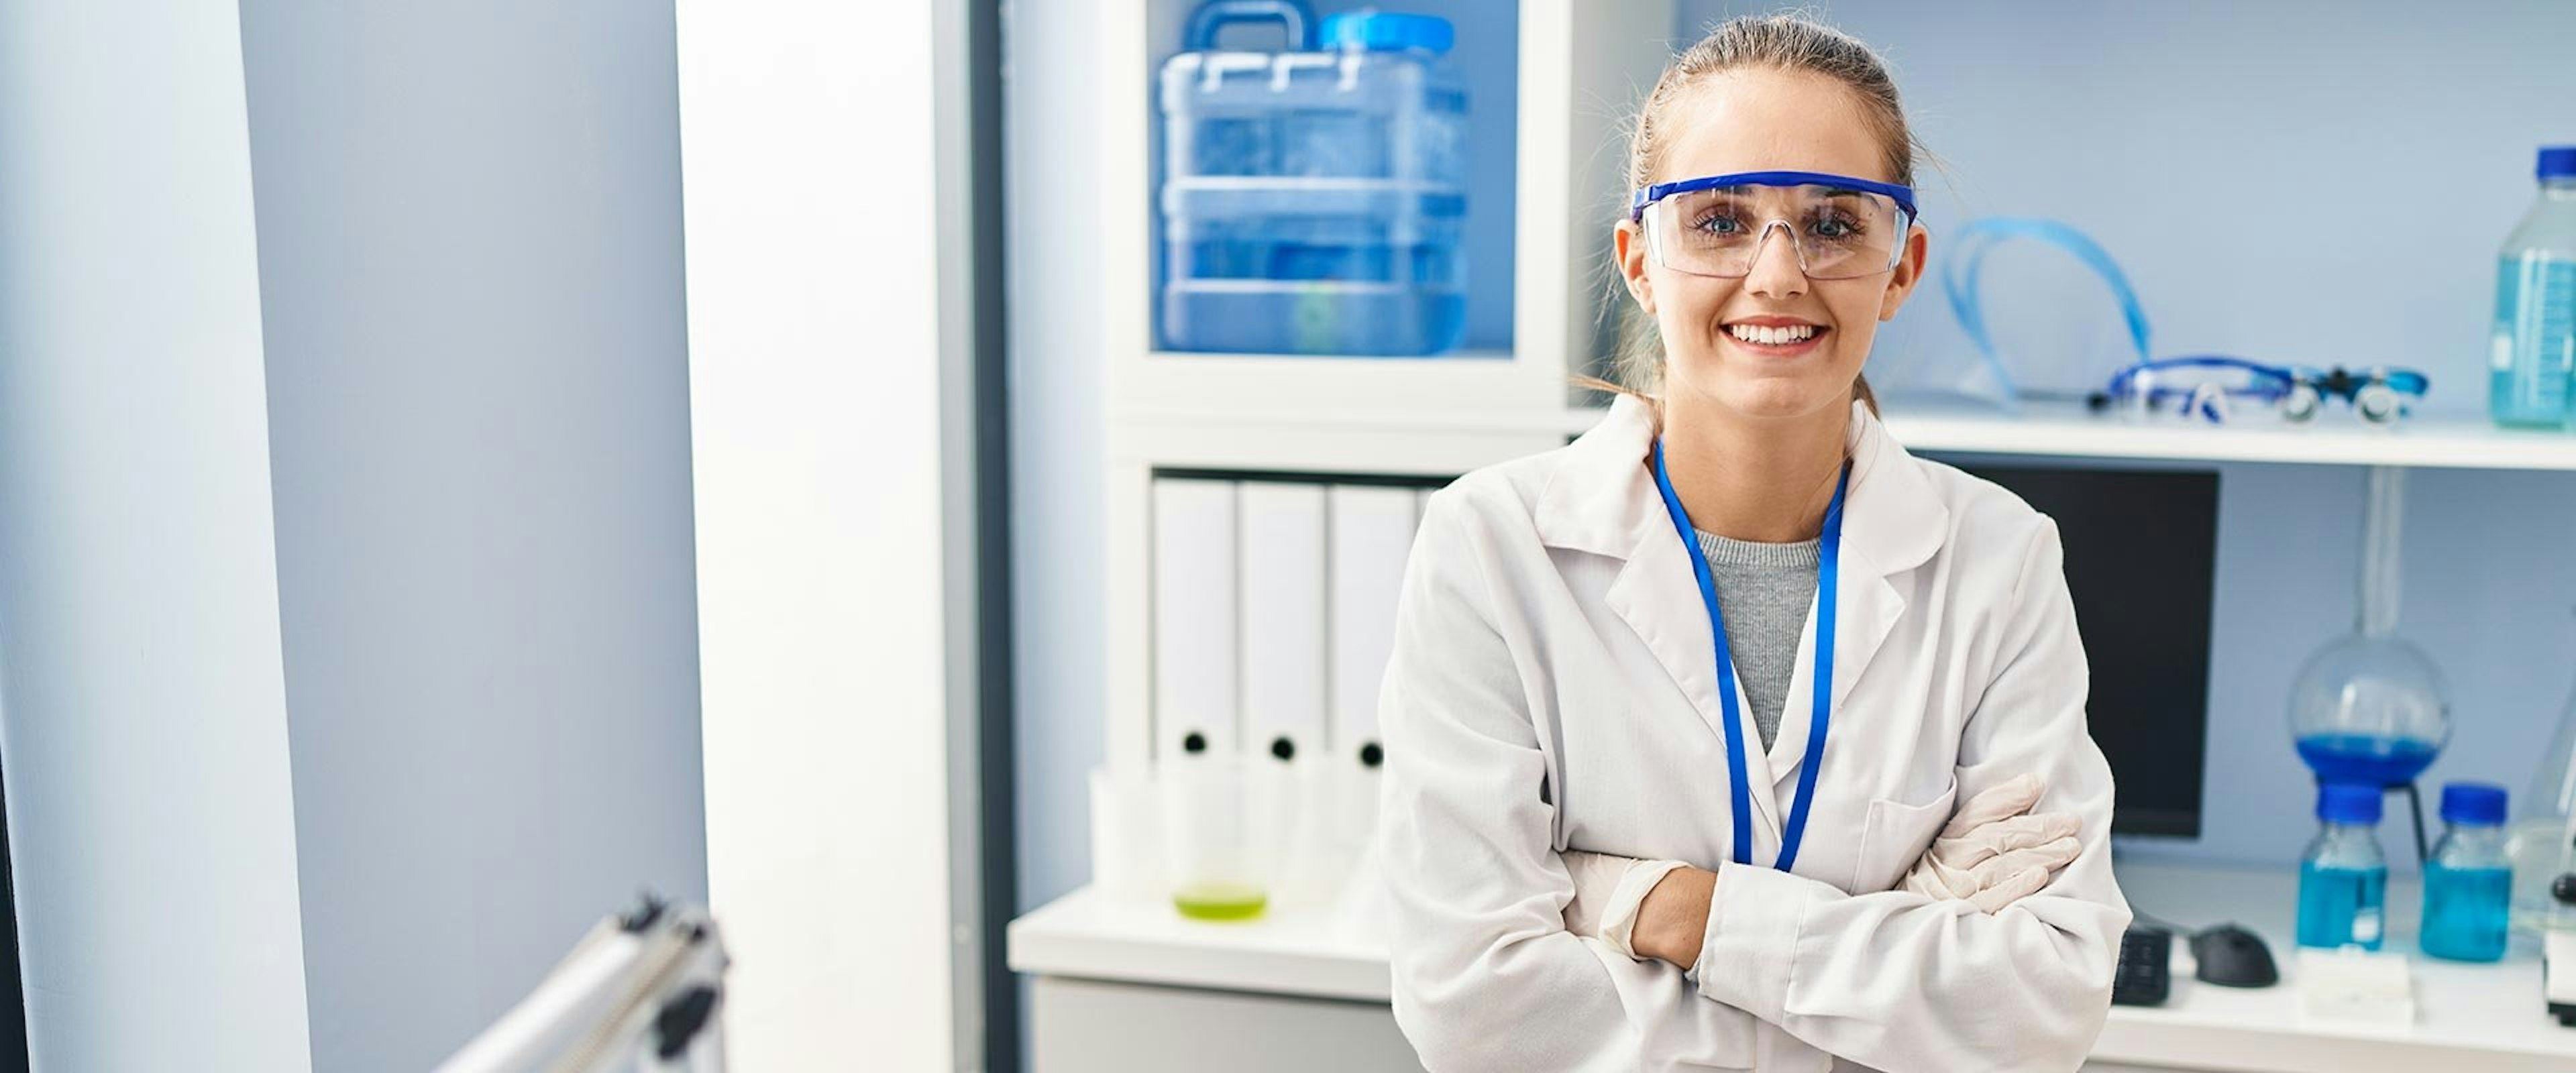 Professional woman in STEM career laboratory